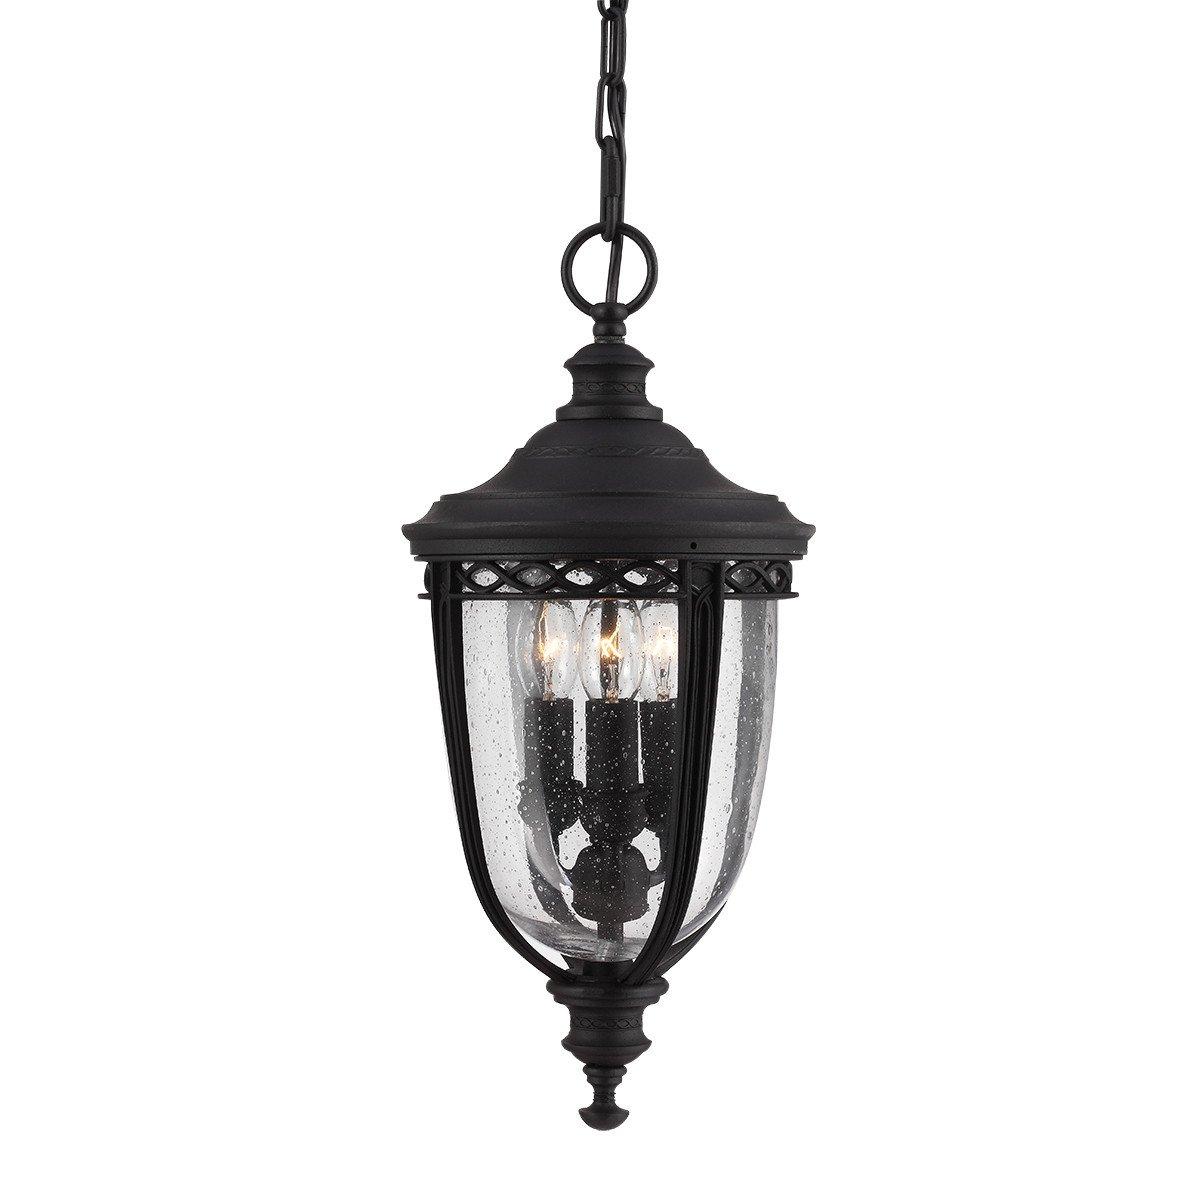 English Bridle 3 Light Medium Outdoor Ceiling Chain Lantern Black E14